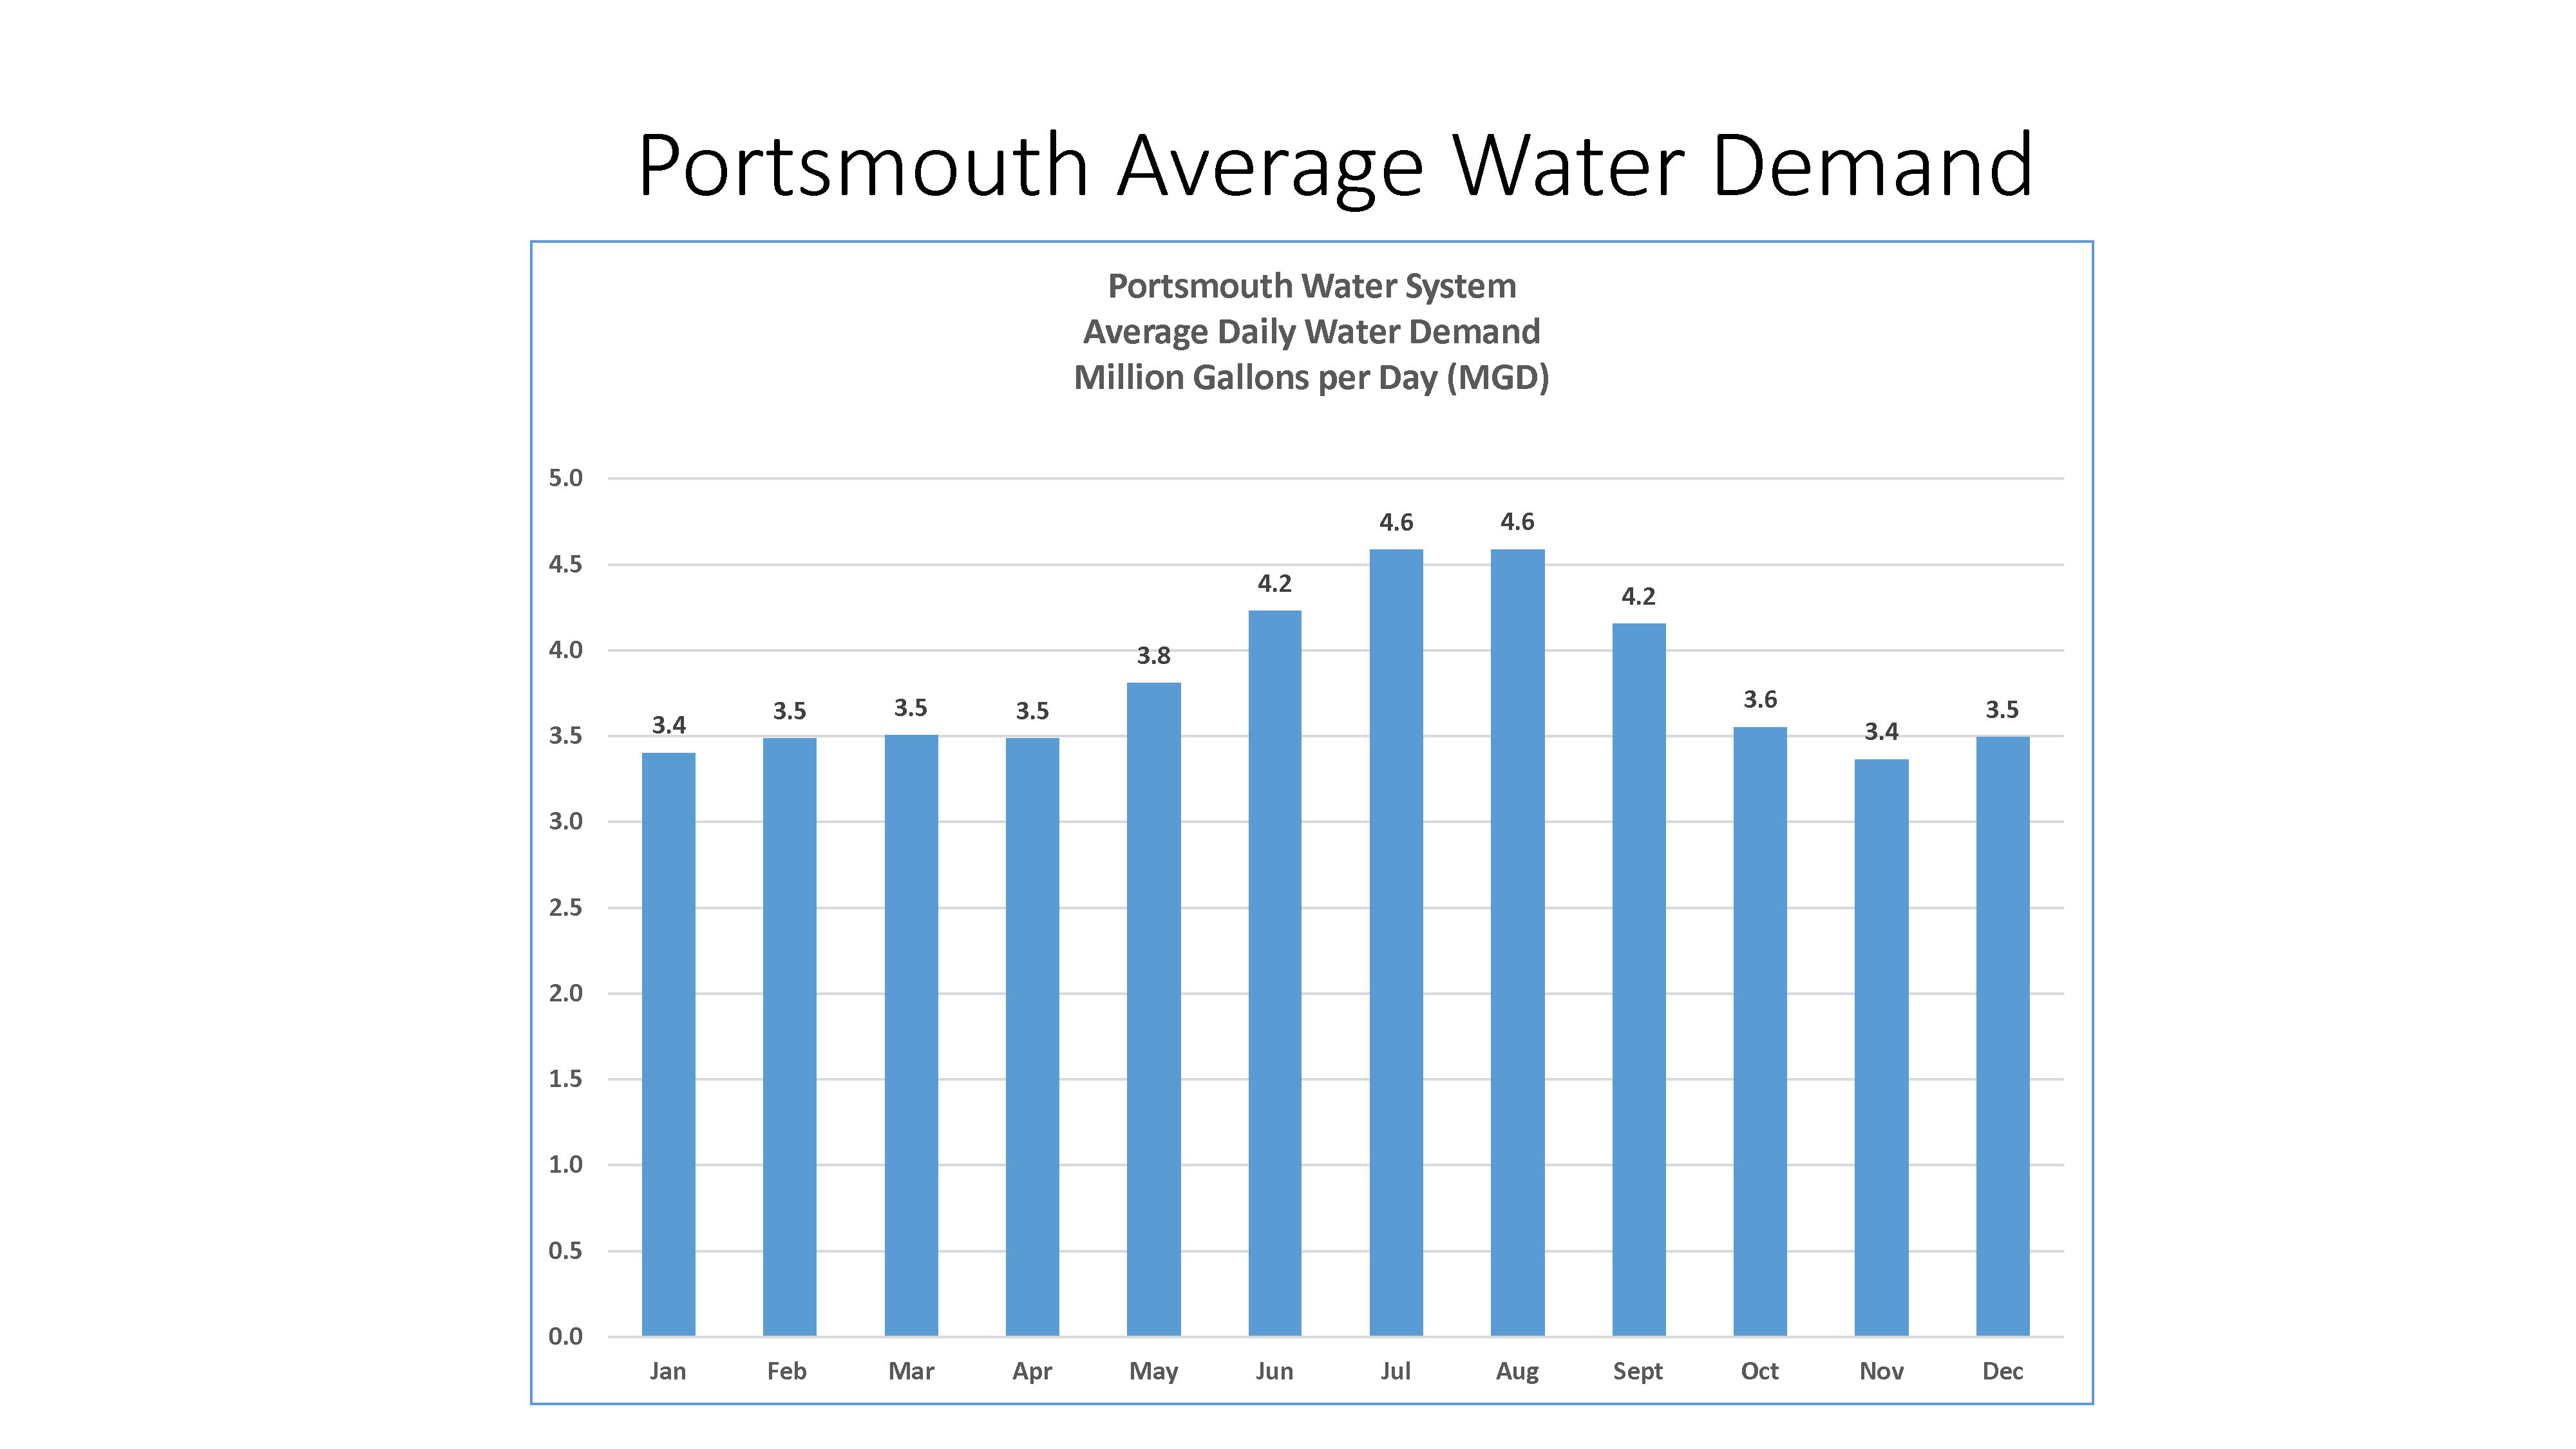 Seasonal Water Demand